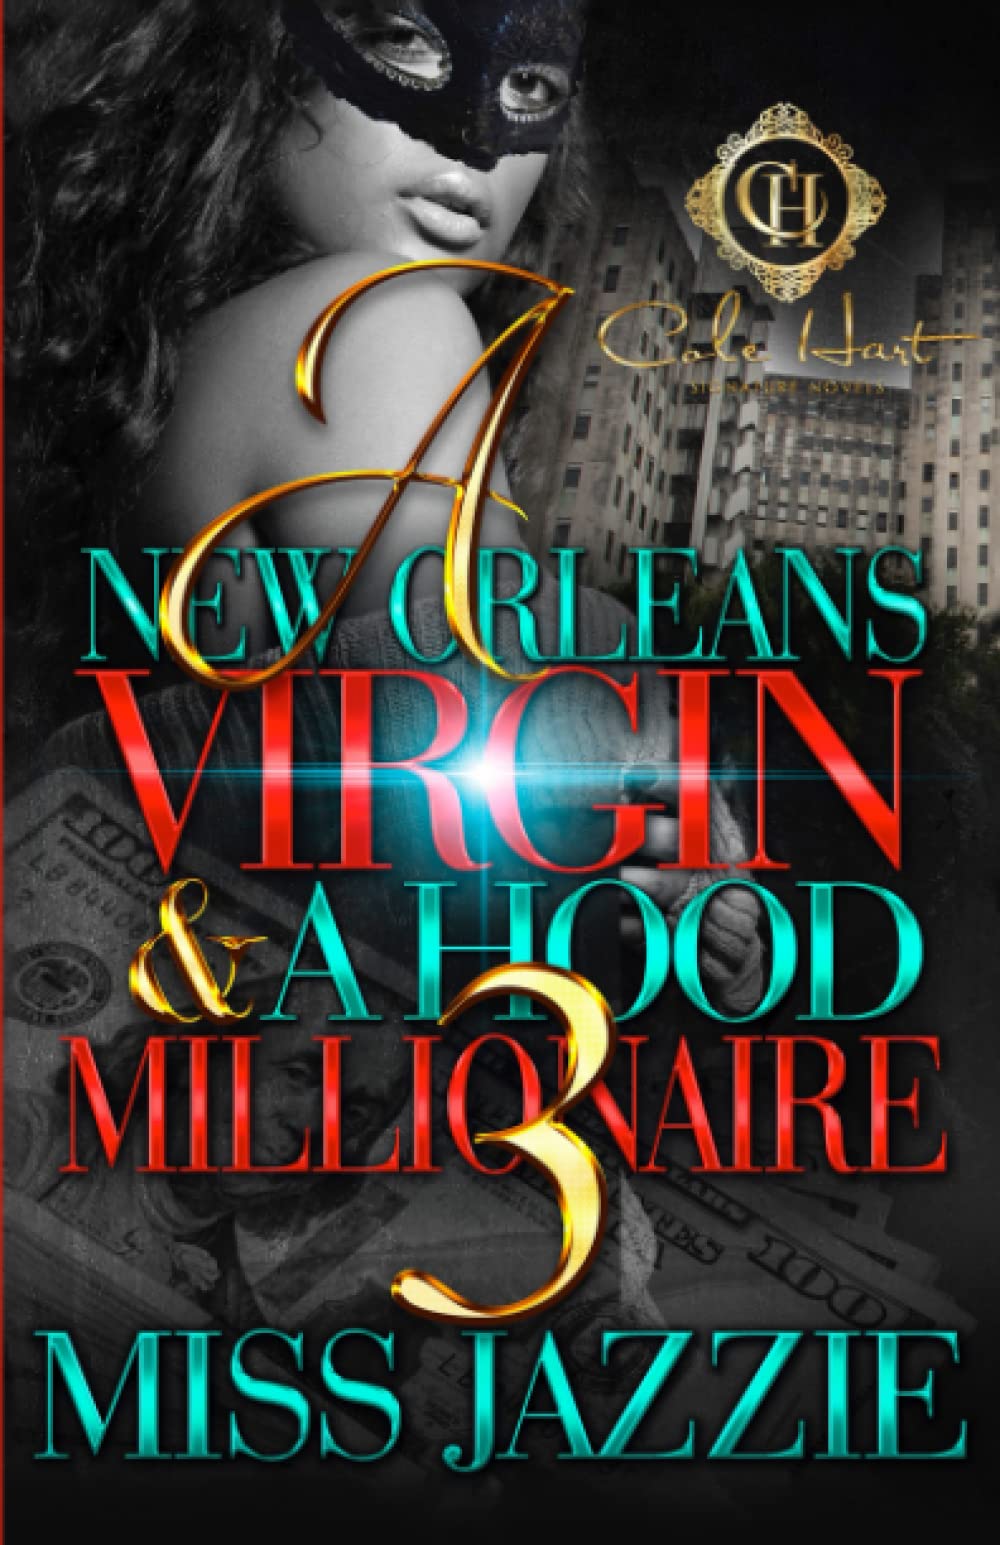 A New Orleans Virgin & A Hood Millionaire 3 SureShot Books